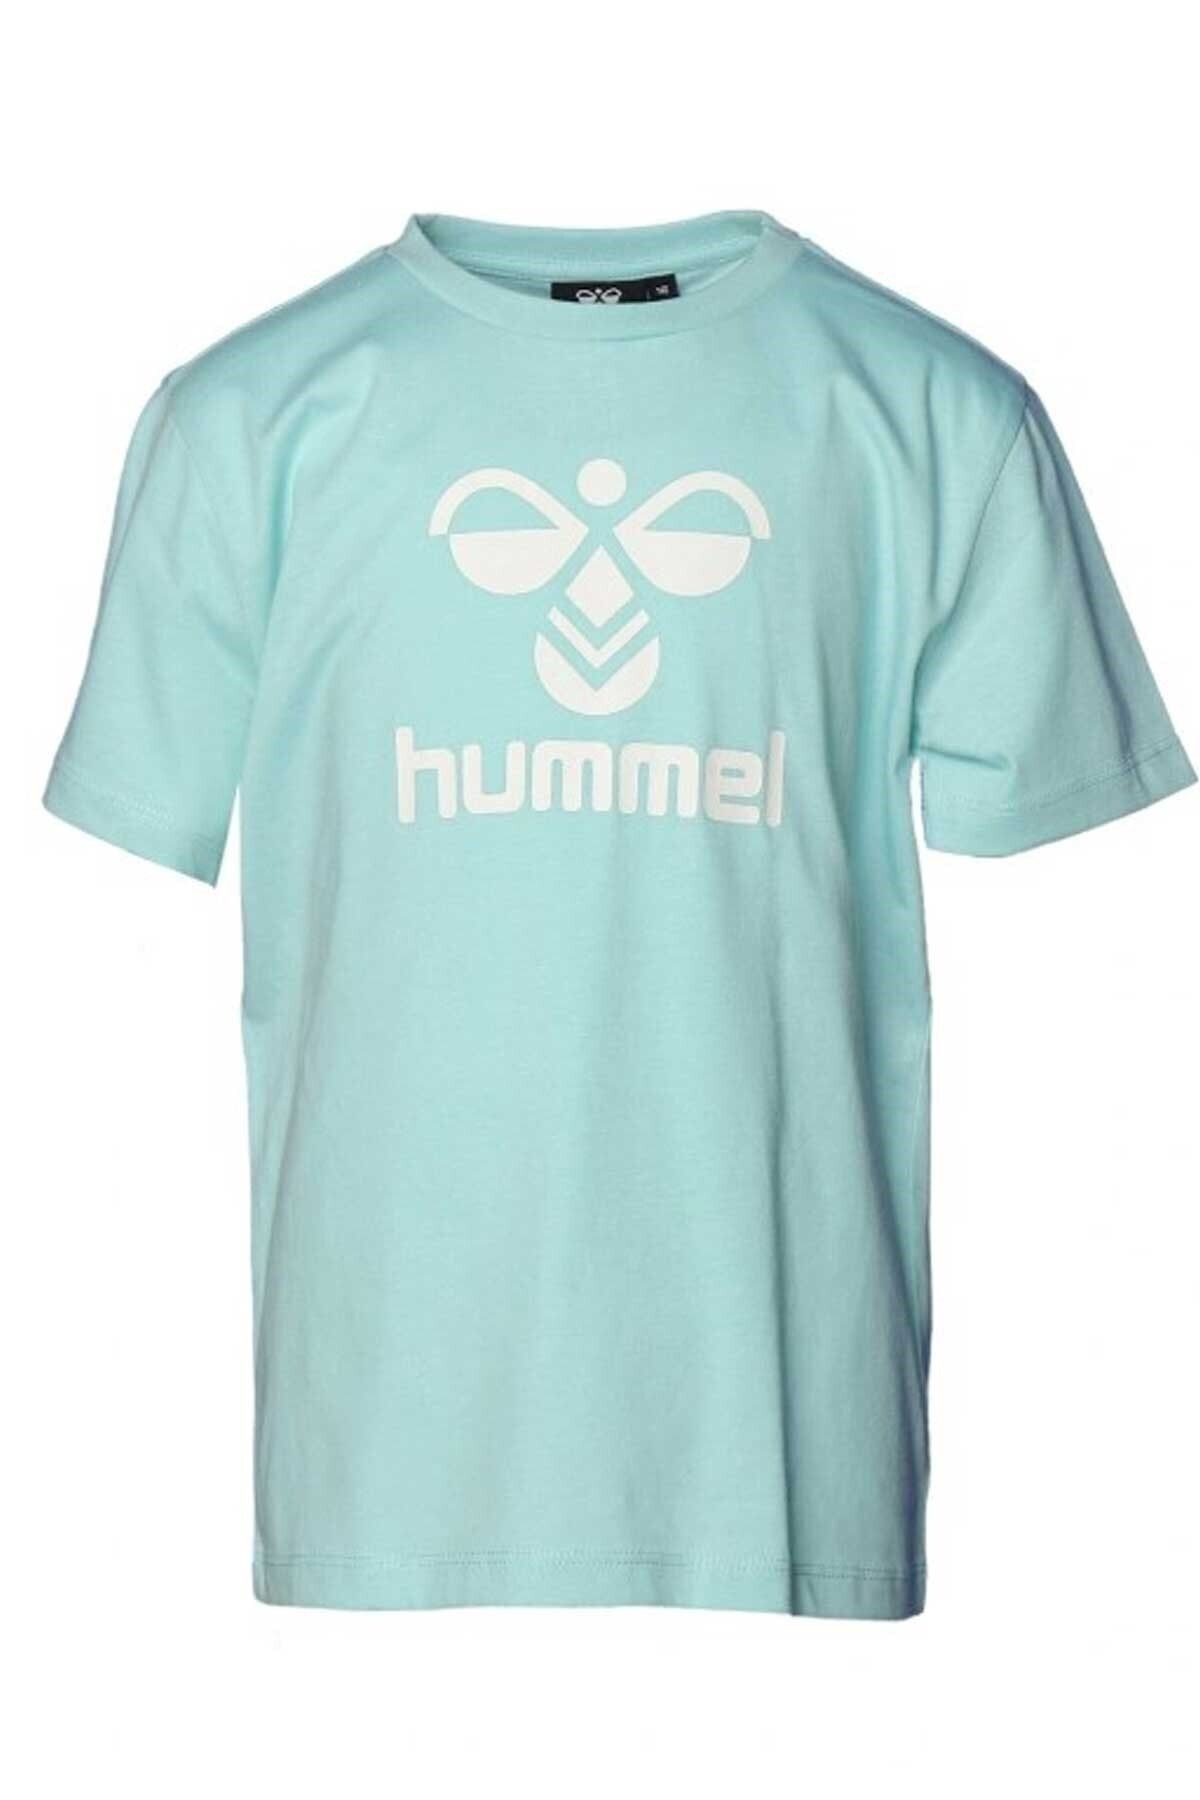 hummel تی شرت کودک لورن 911653-7246